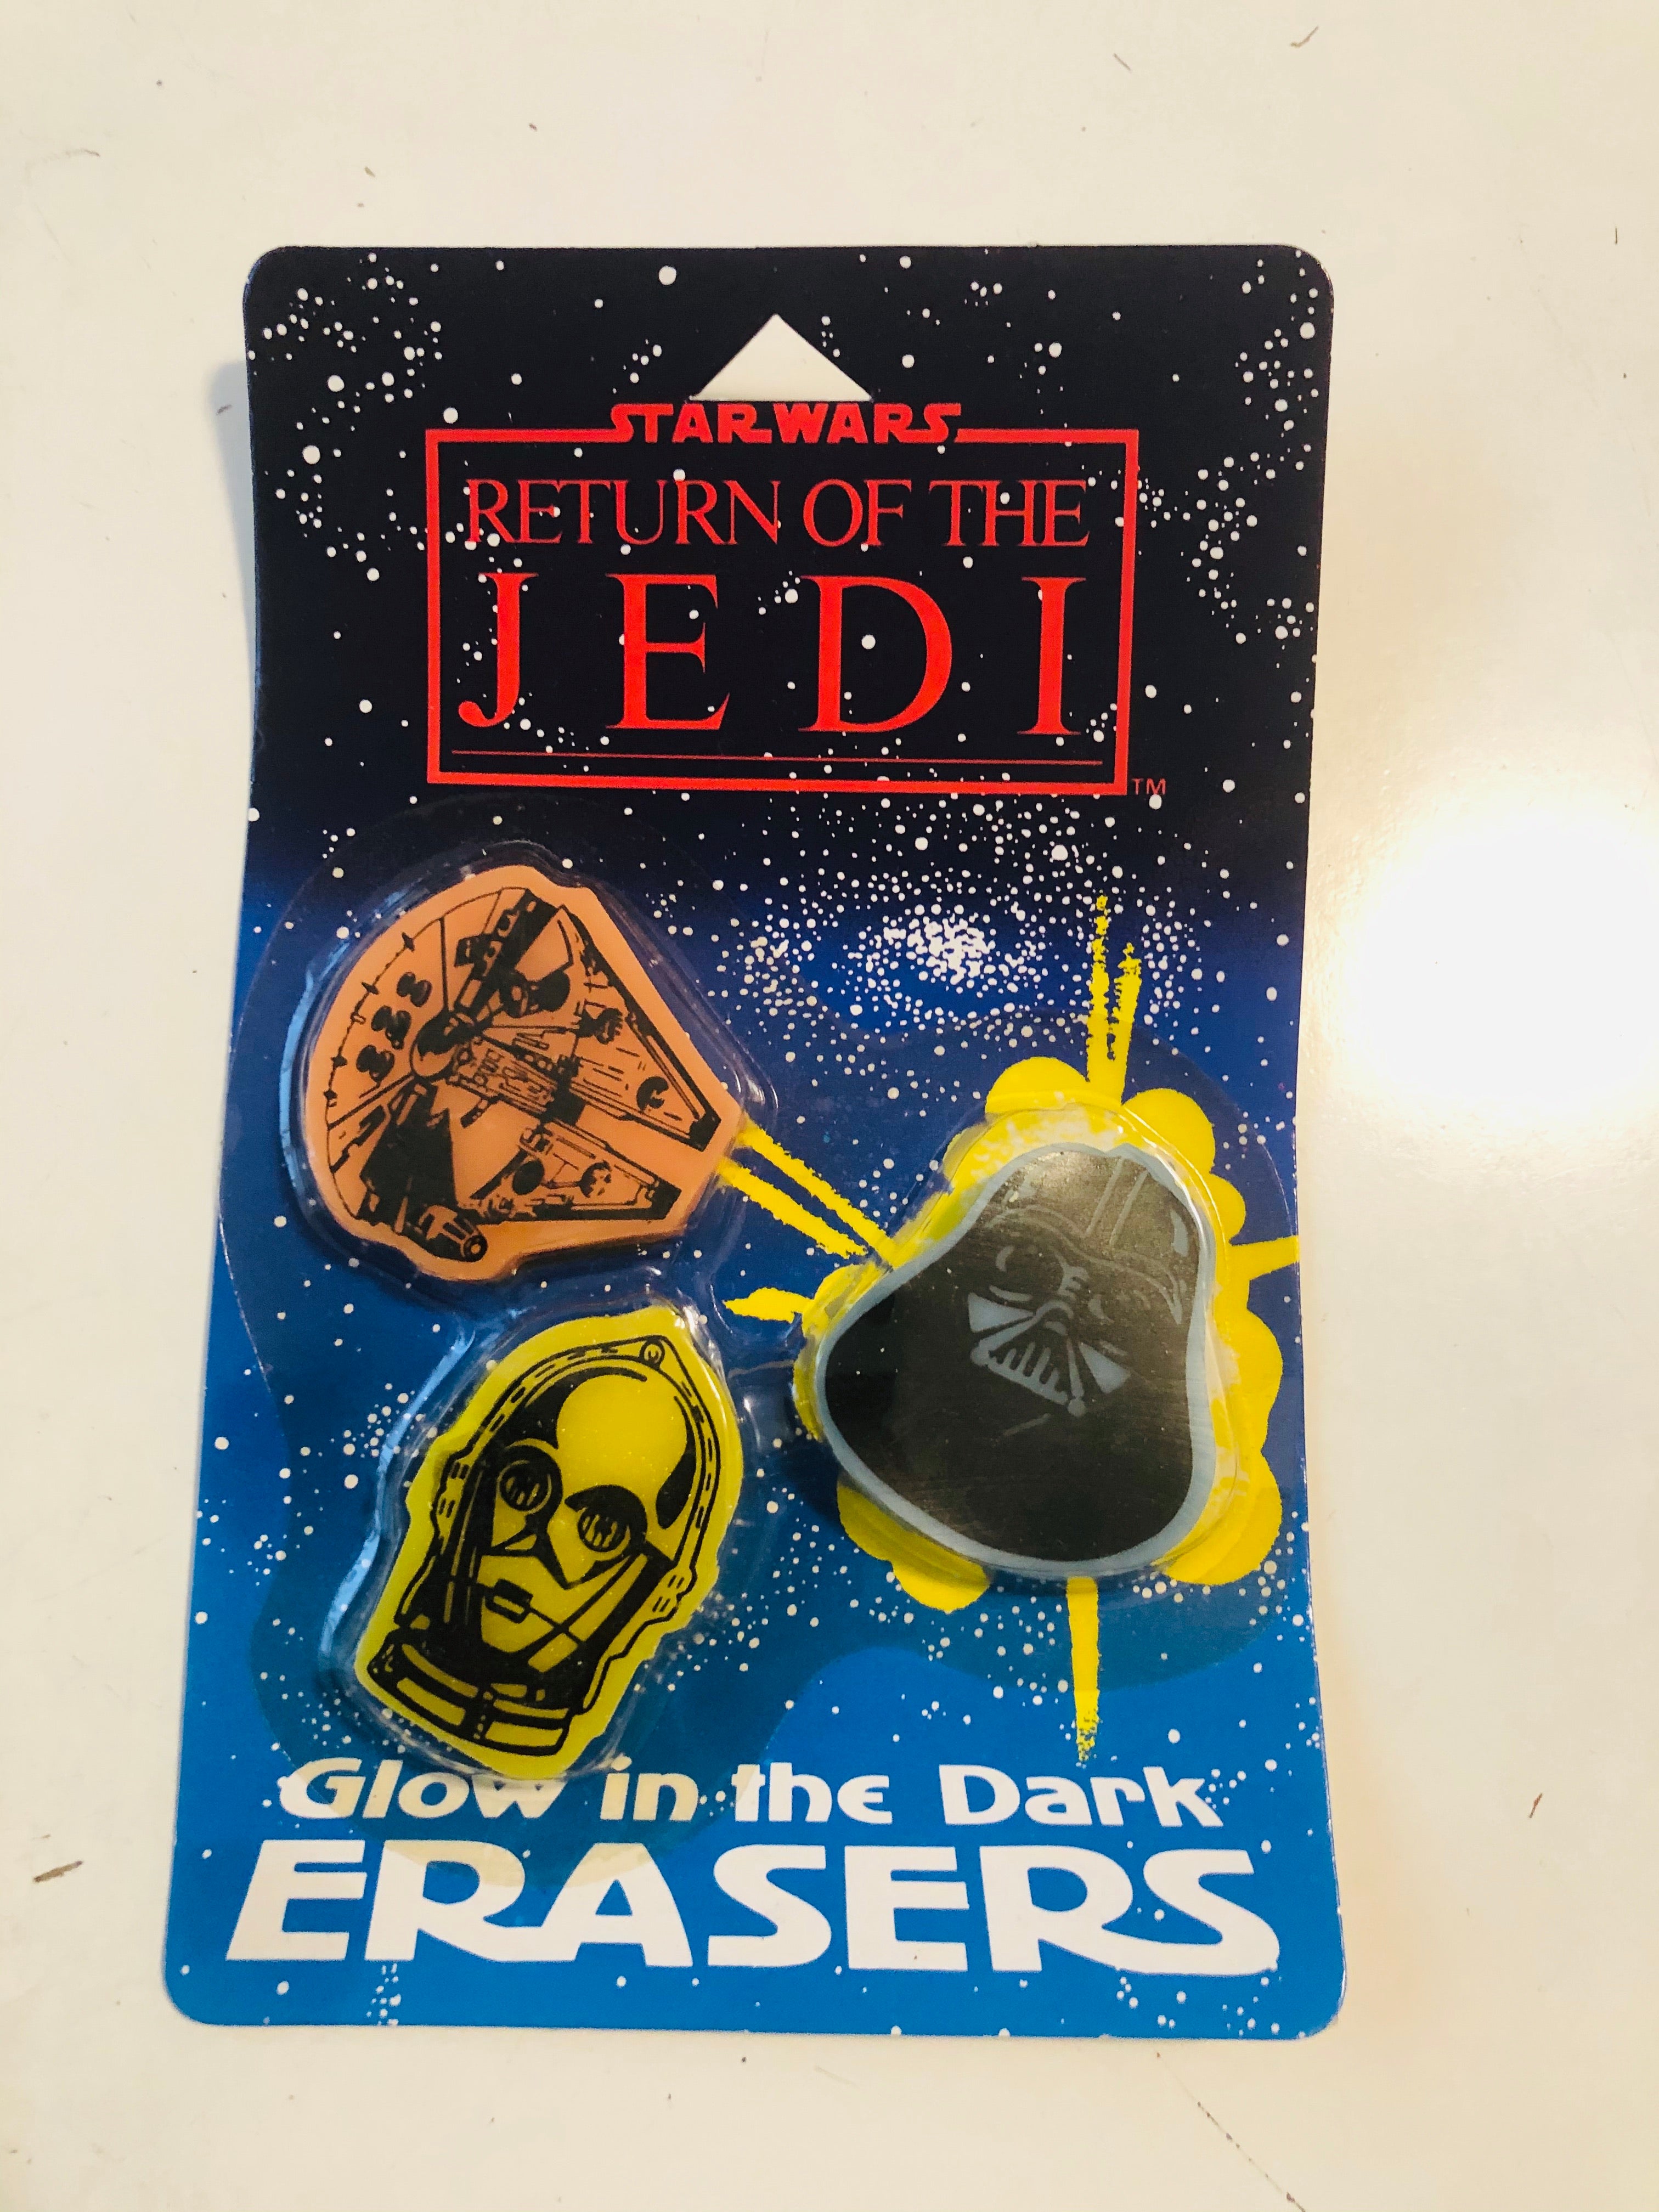 Star Wars Return of Jedi erasers set 1983